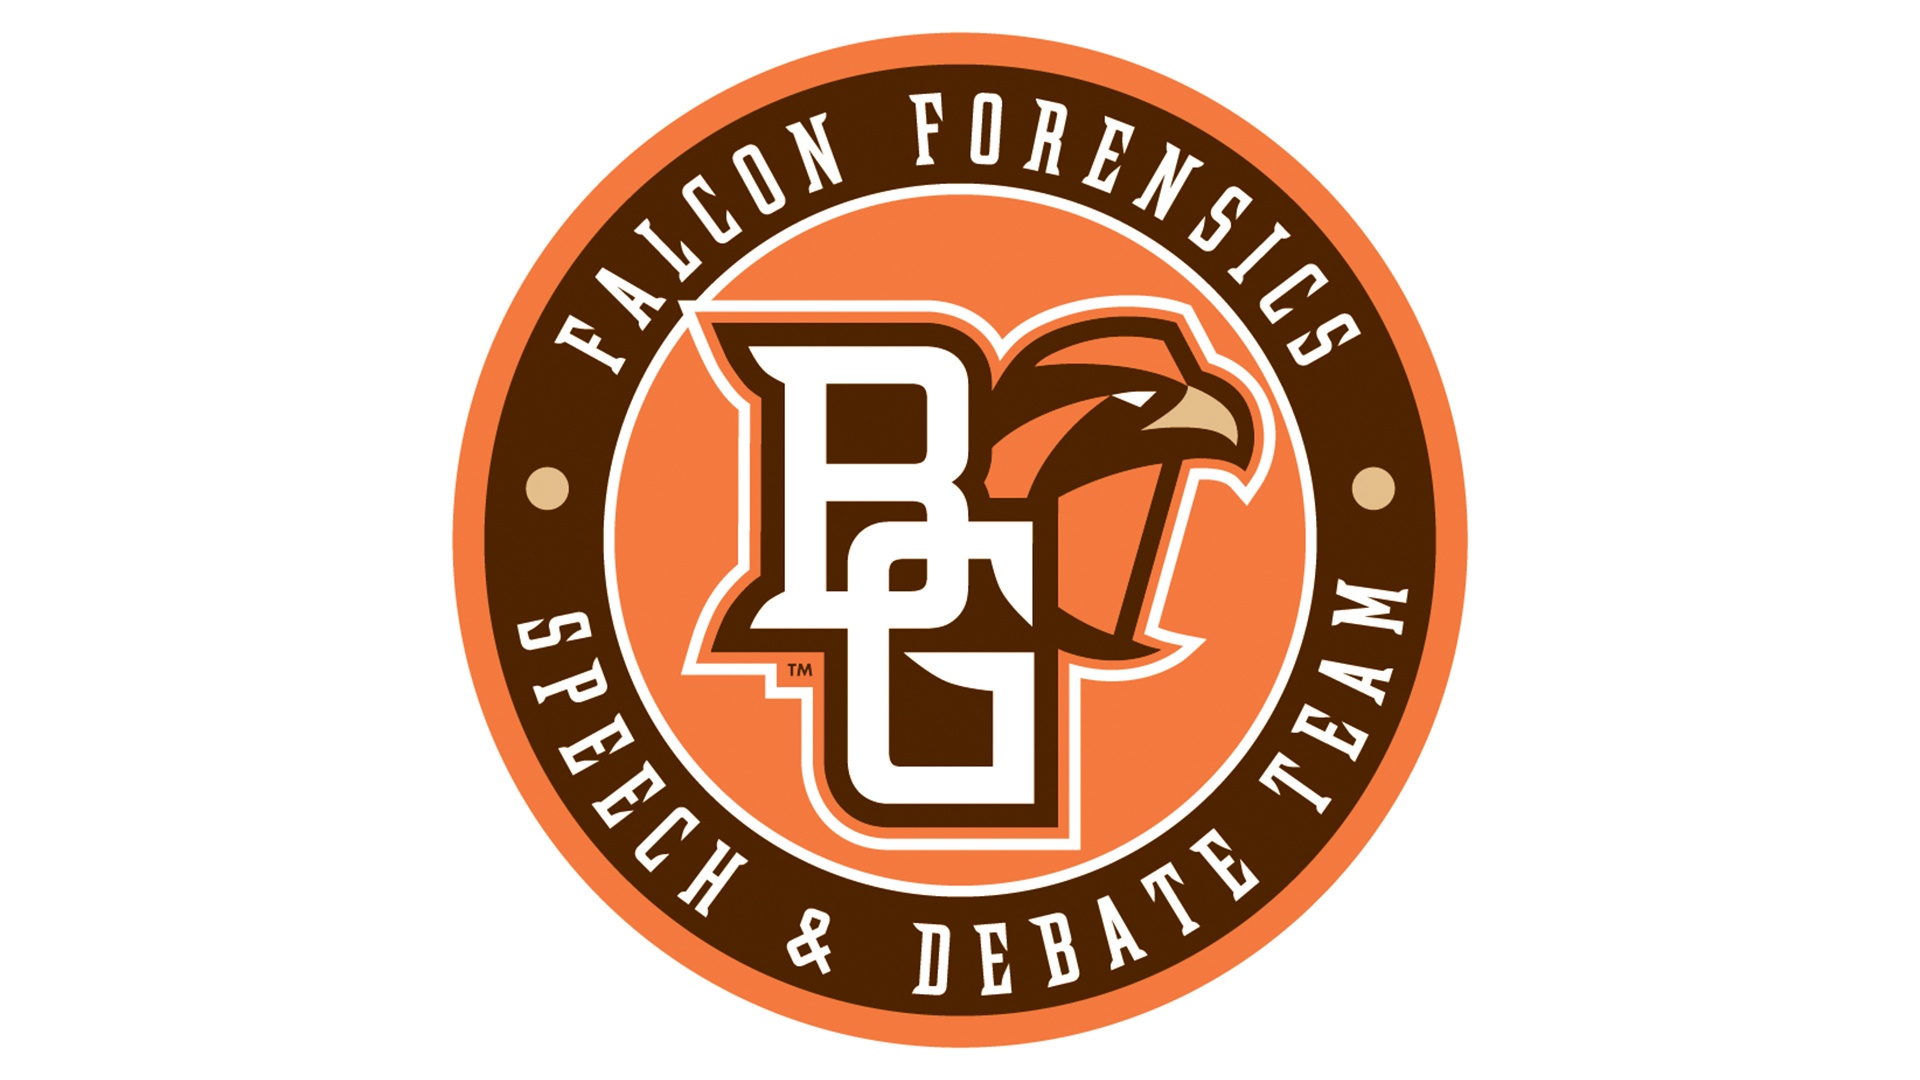 Falcon Forensics, Speech and Debate Team Seal